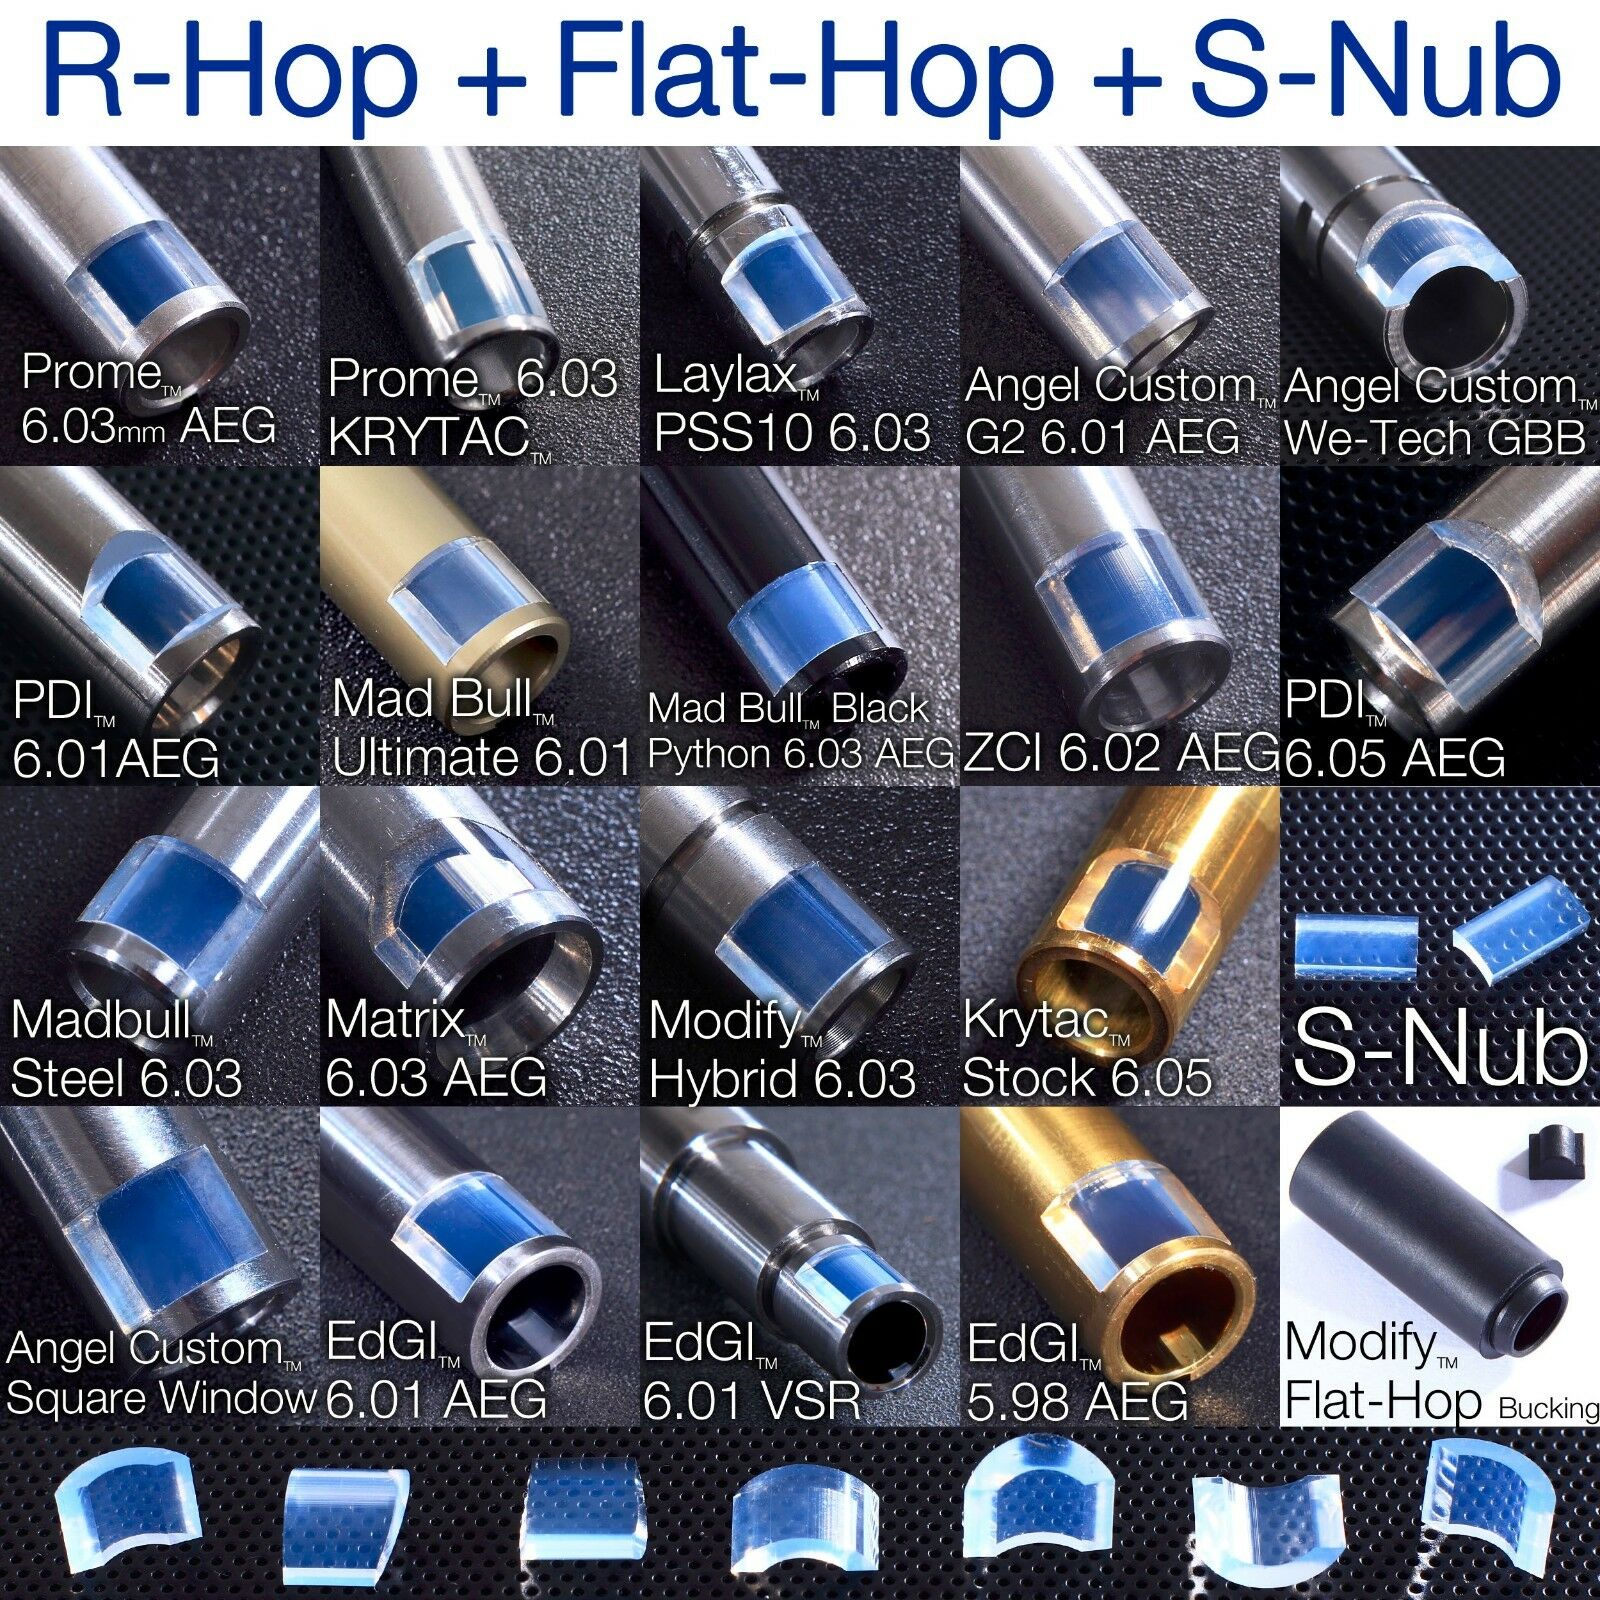 R-hop + Modify Baton Flat-hop Bucking Hard Type + S-nub Airsoft Rhop Hopup Nub